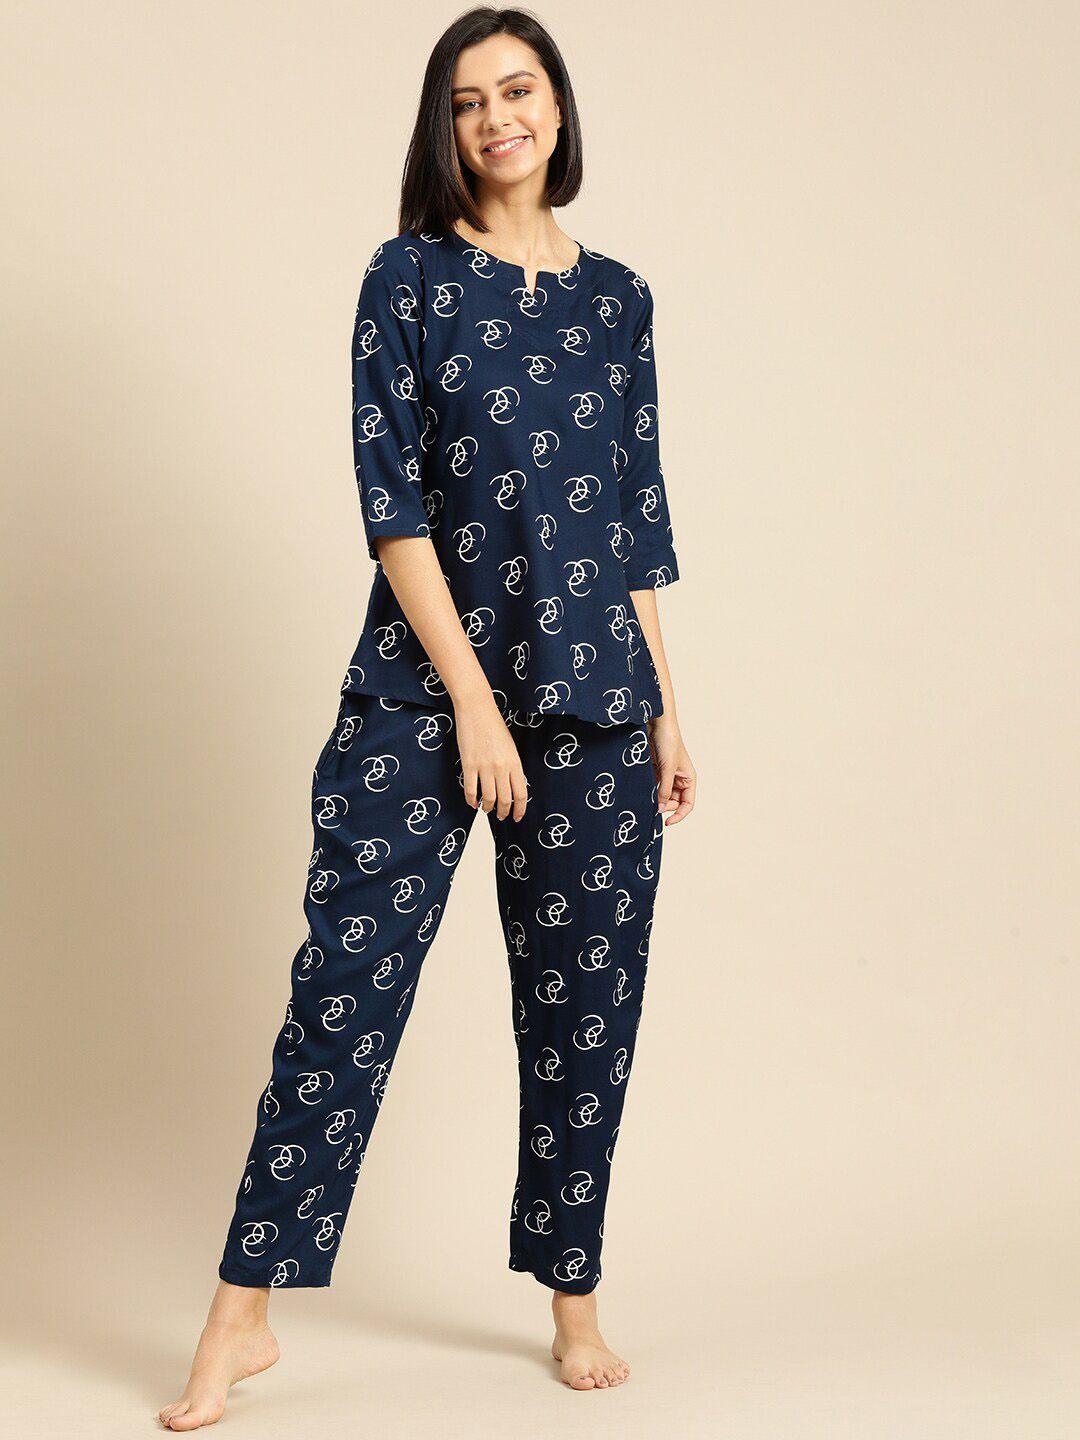 ichaa conversational printed notched neck top with pyjamas